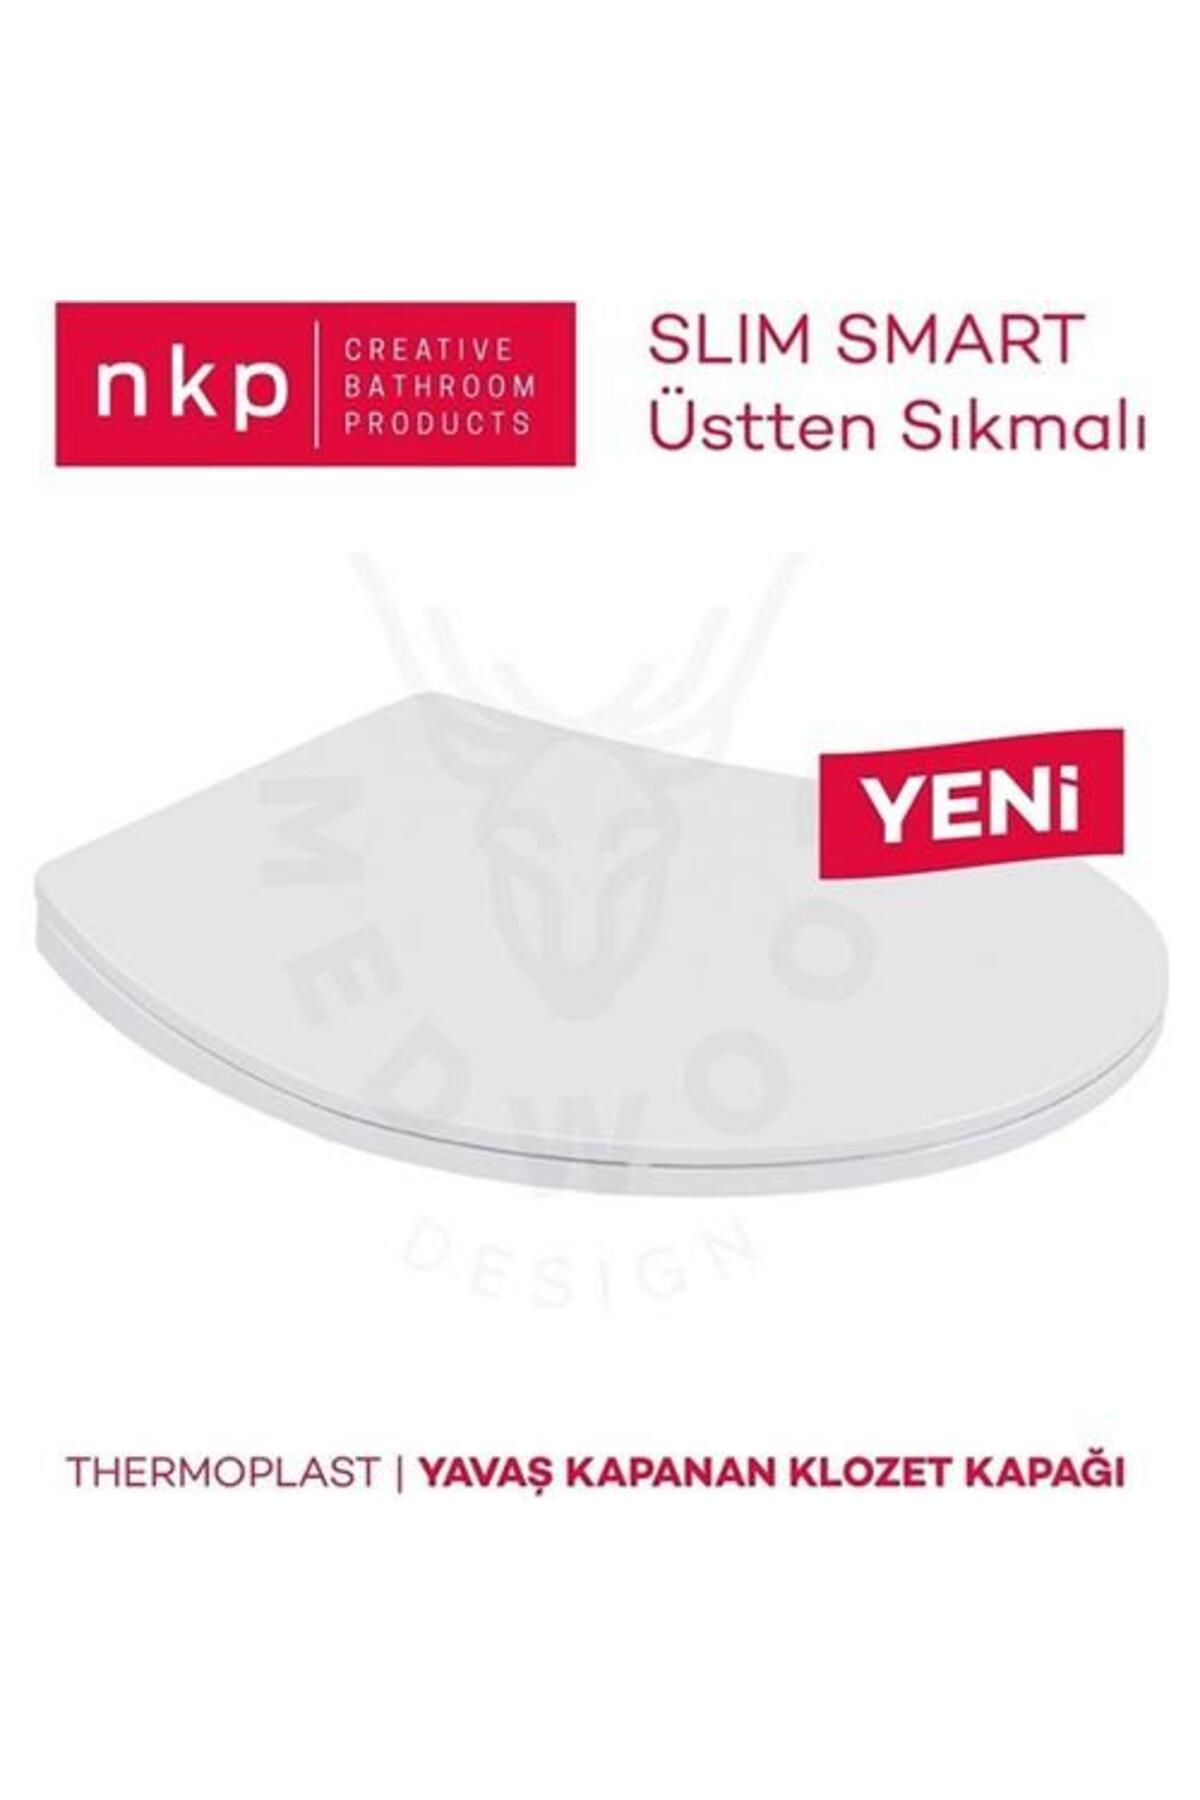 NKP Slim Smart Thermoplast Yavaş Kapanan Klozet Kapağı 0302